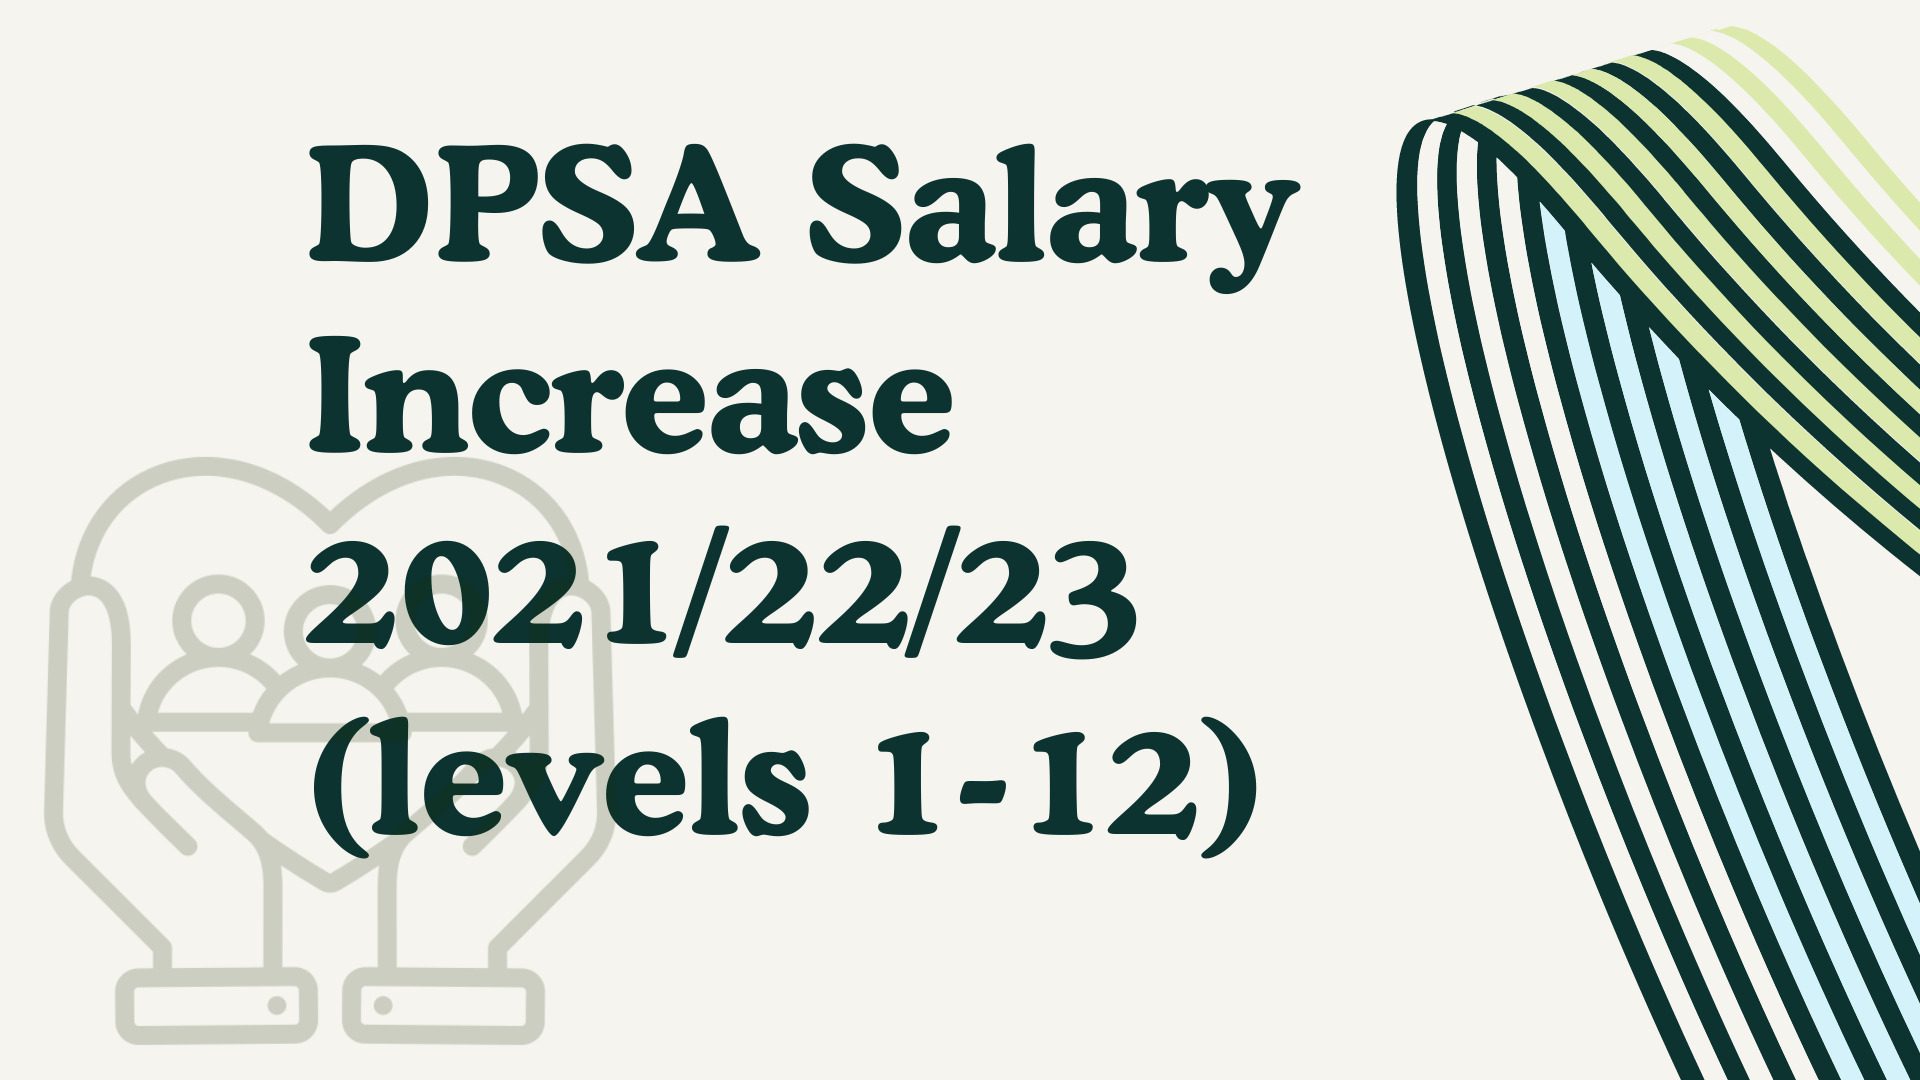 DPSA Salary Increase 2021/22/23 (Levels 112) Update